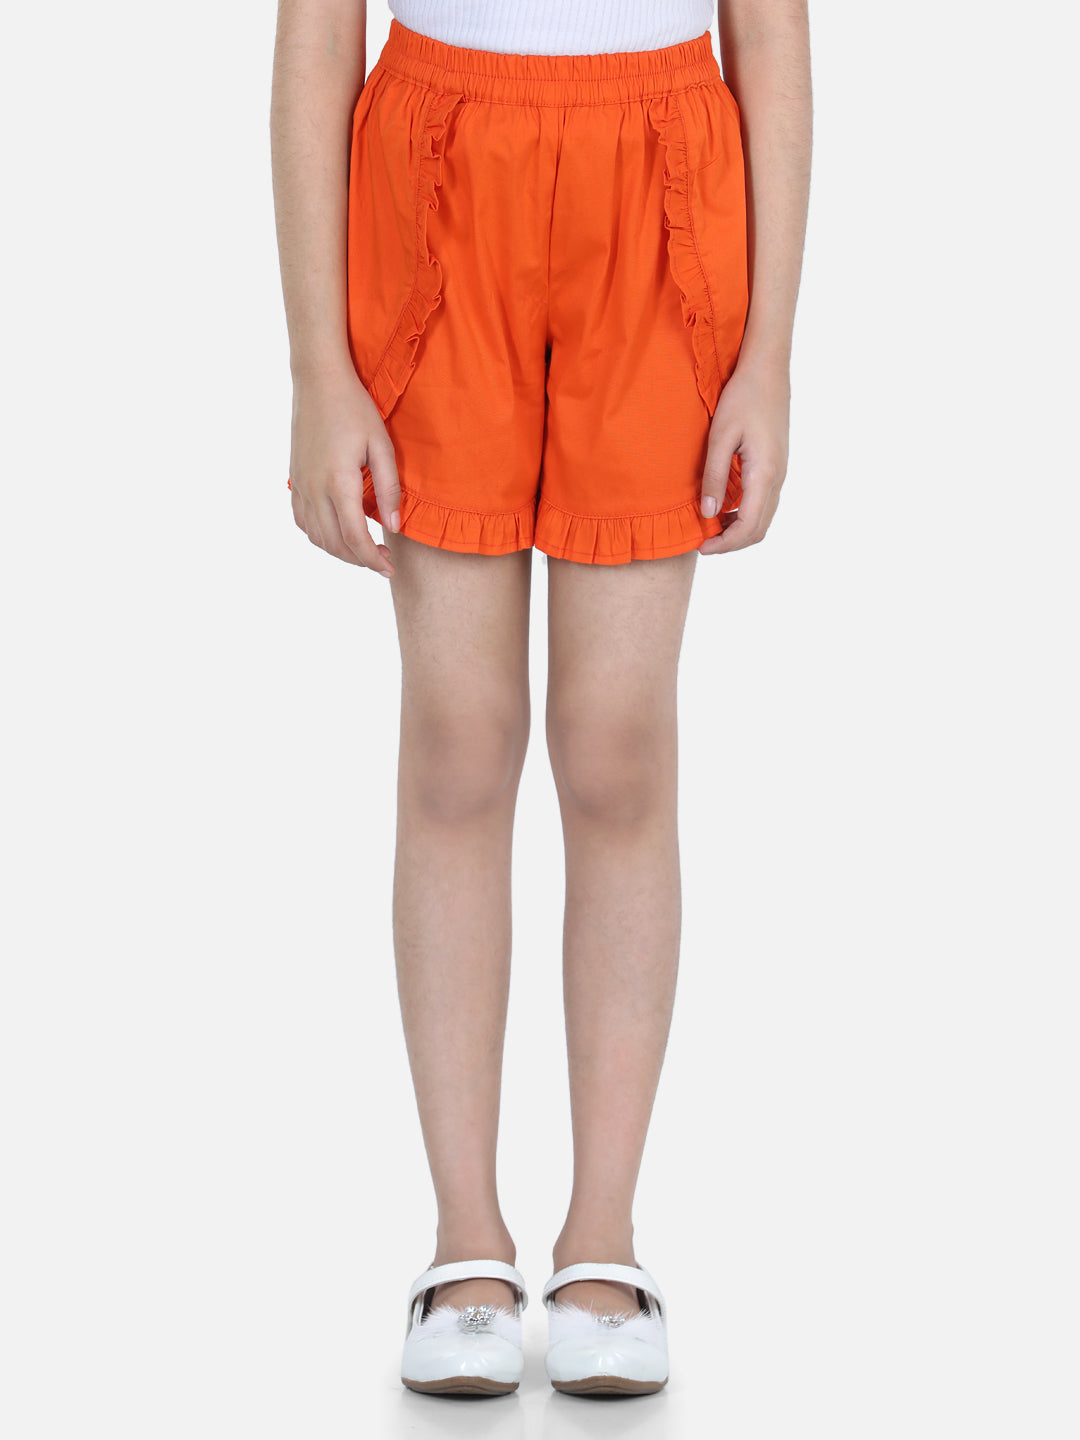 Cutiekins Solid Cotton Lycra Shorts For Girls - Orange